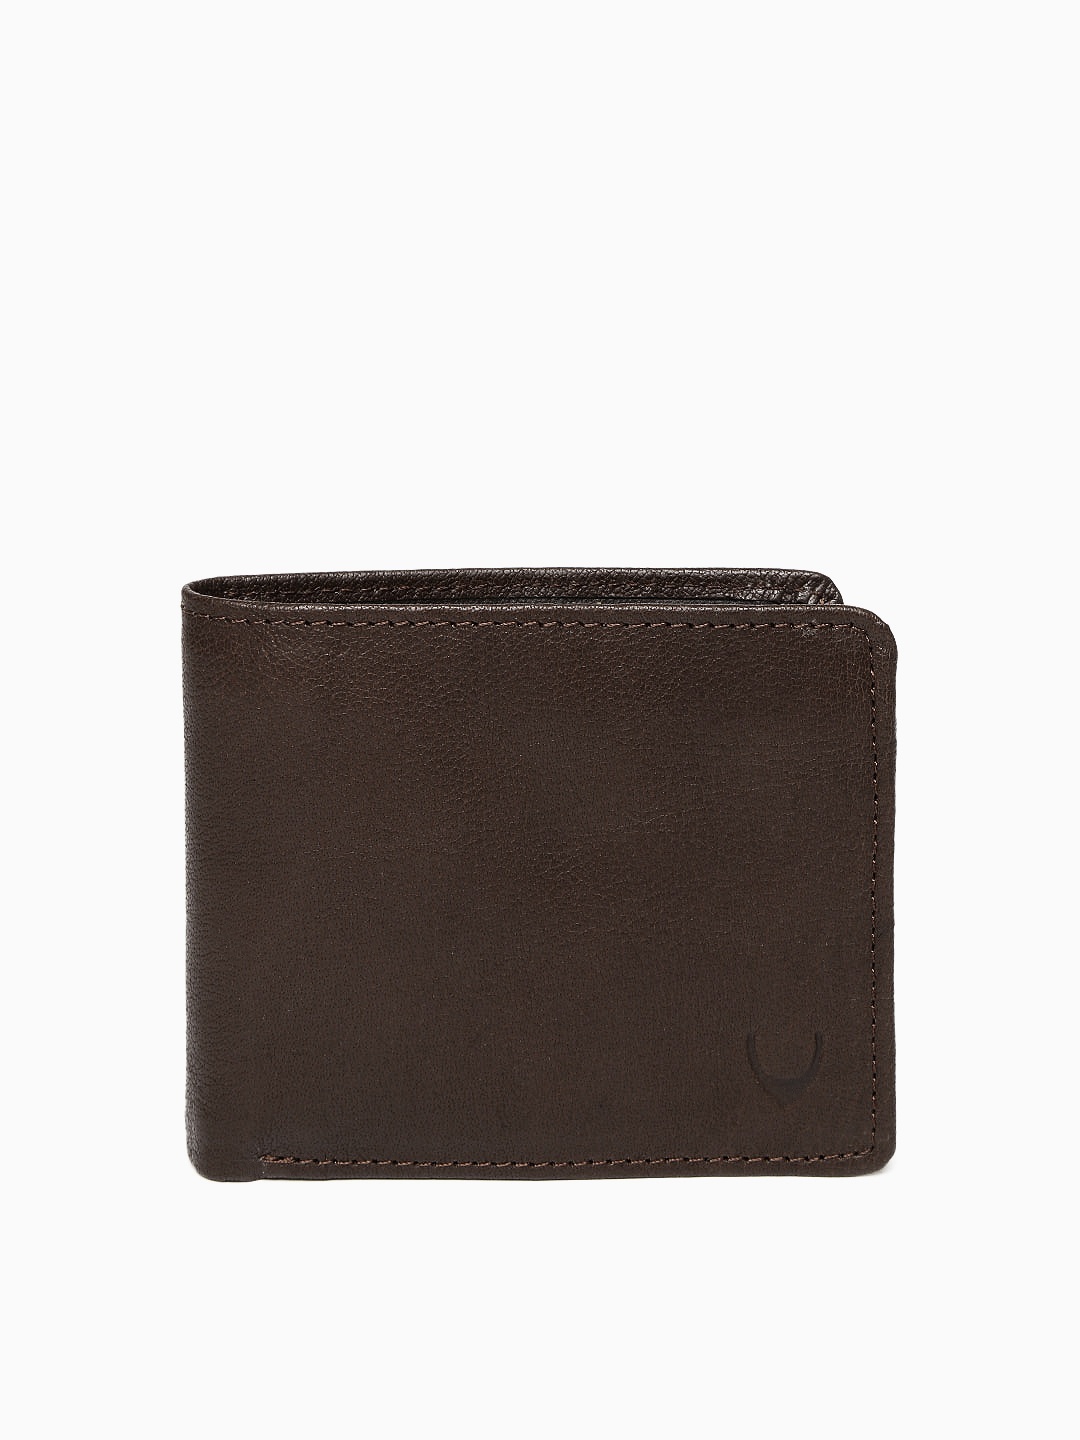 Myntra Hidesign Men Brown Leather Wallet 794080 | Buy Myntra Hidesign Wallets at best price ...